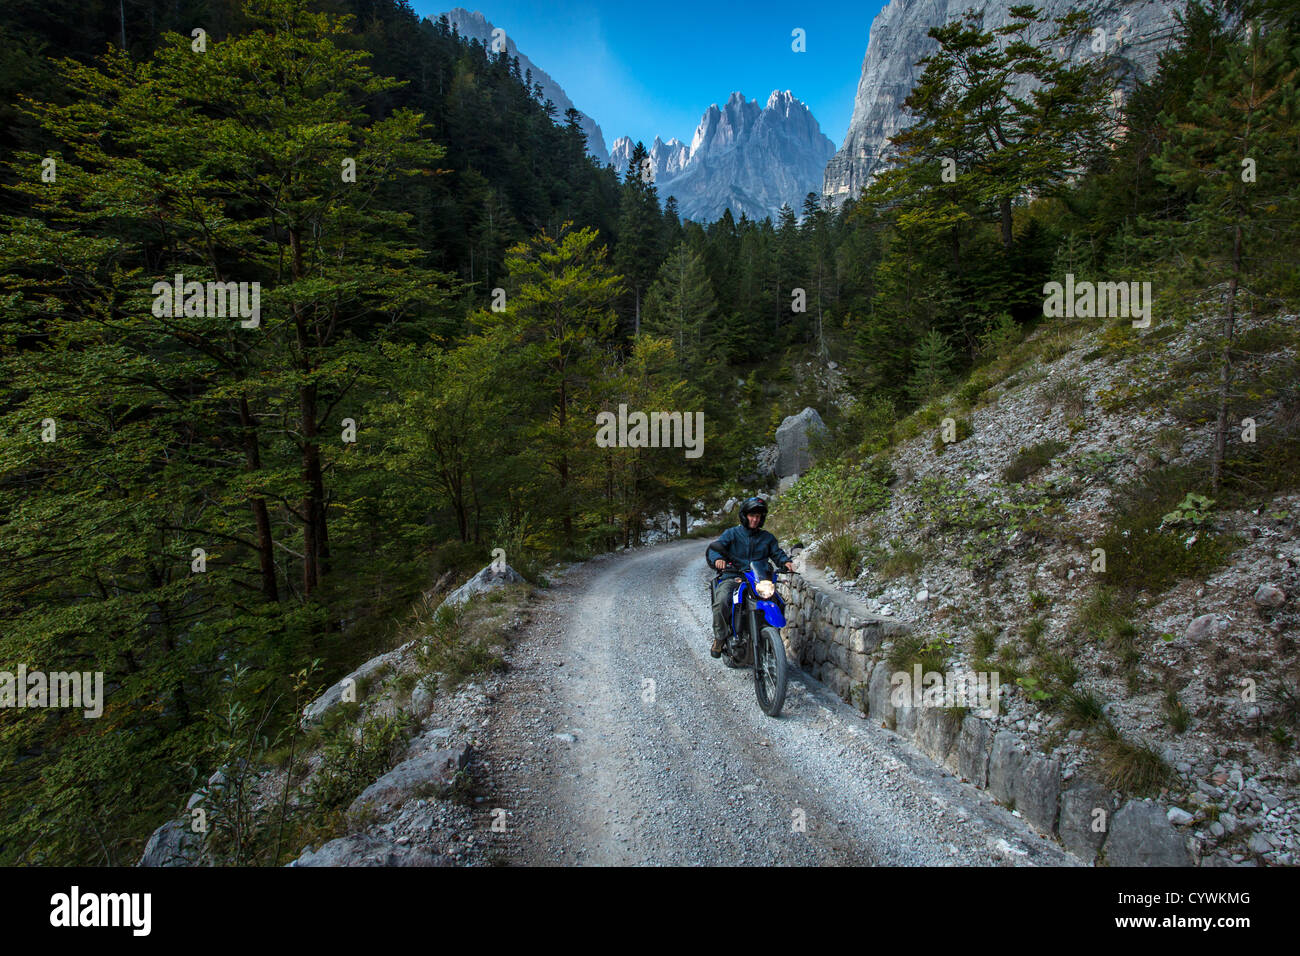 A motorbike drives in the Brenta Dolomites, Italy Stock Photo